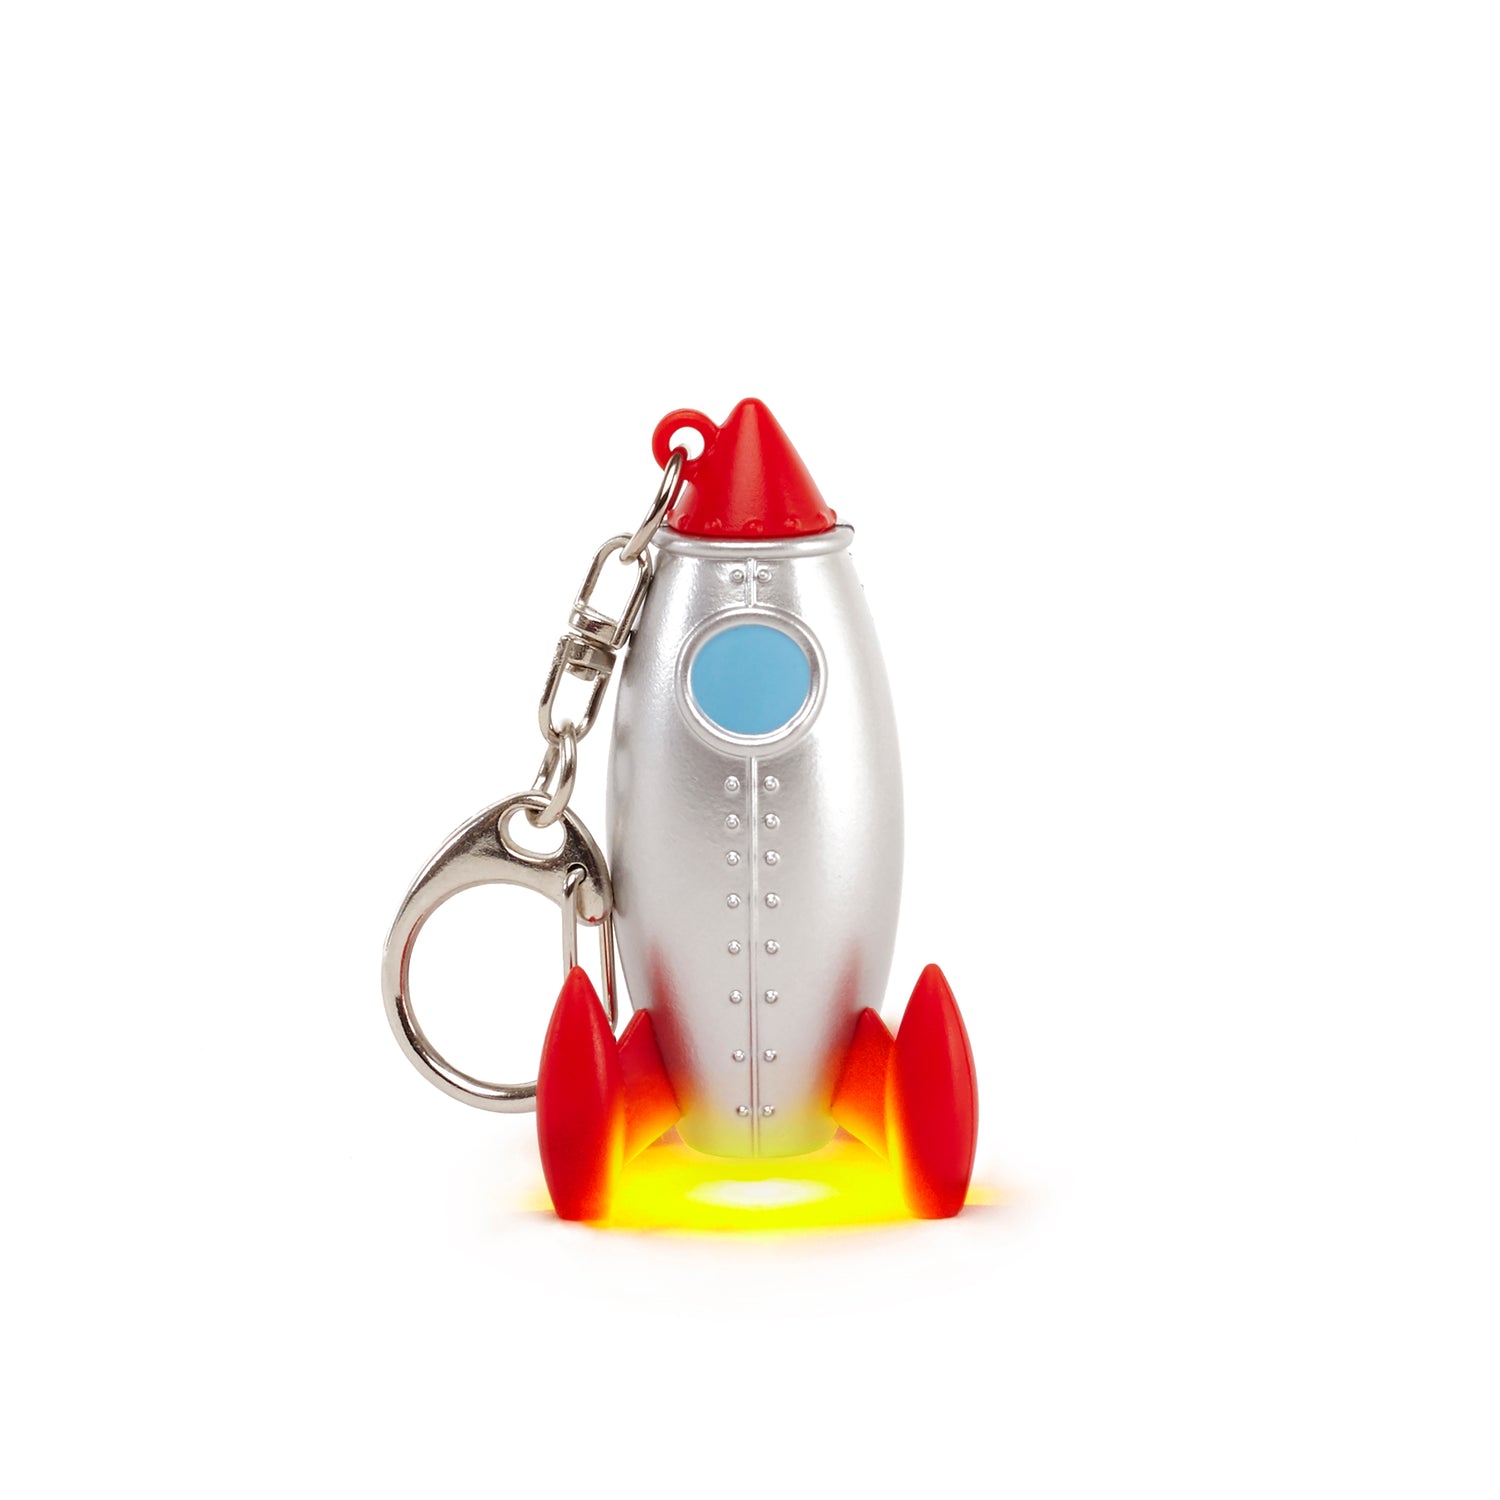 Rocket LED & Sound Keychain